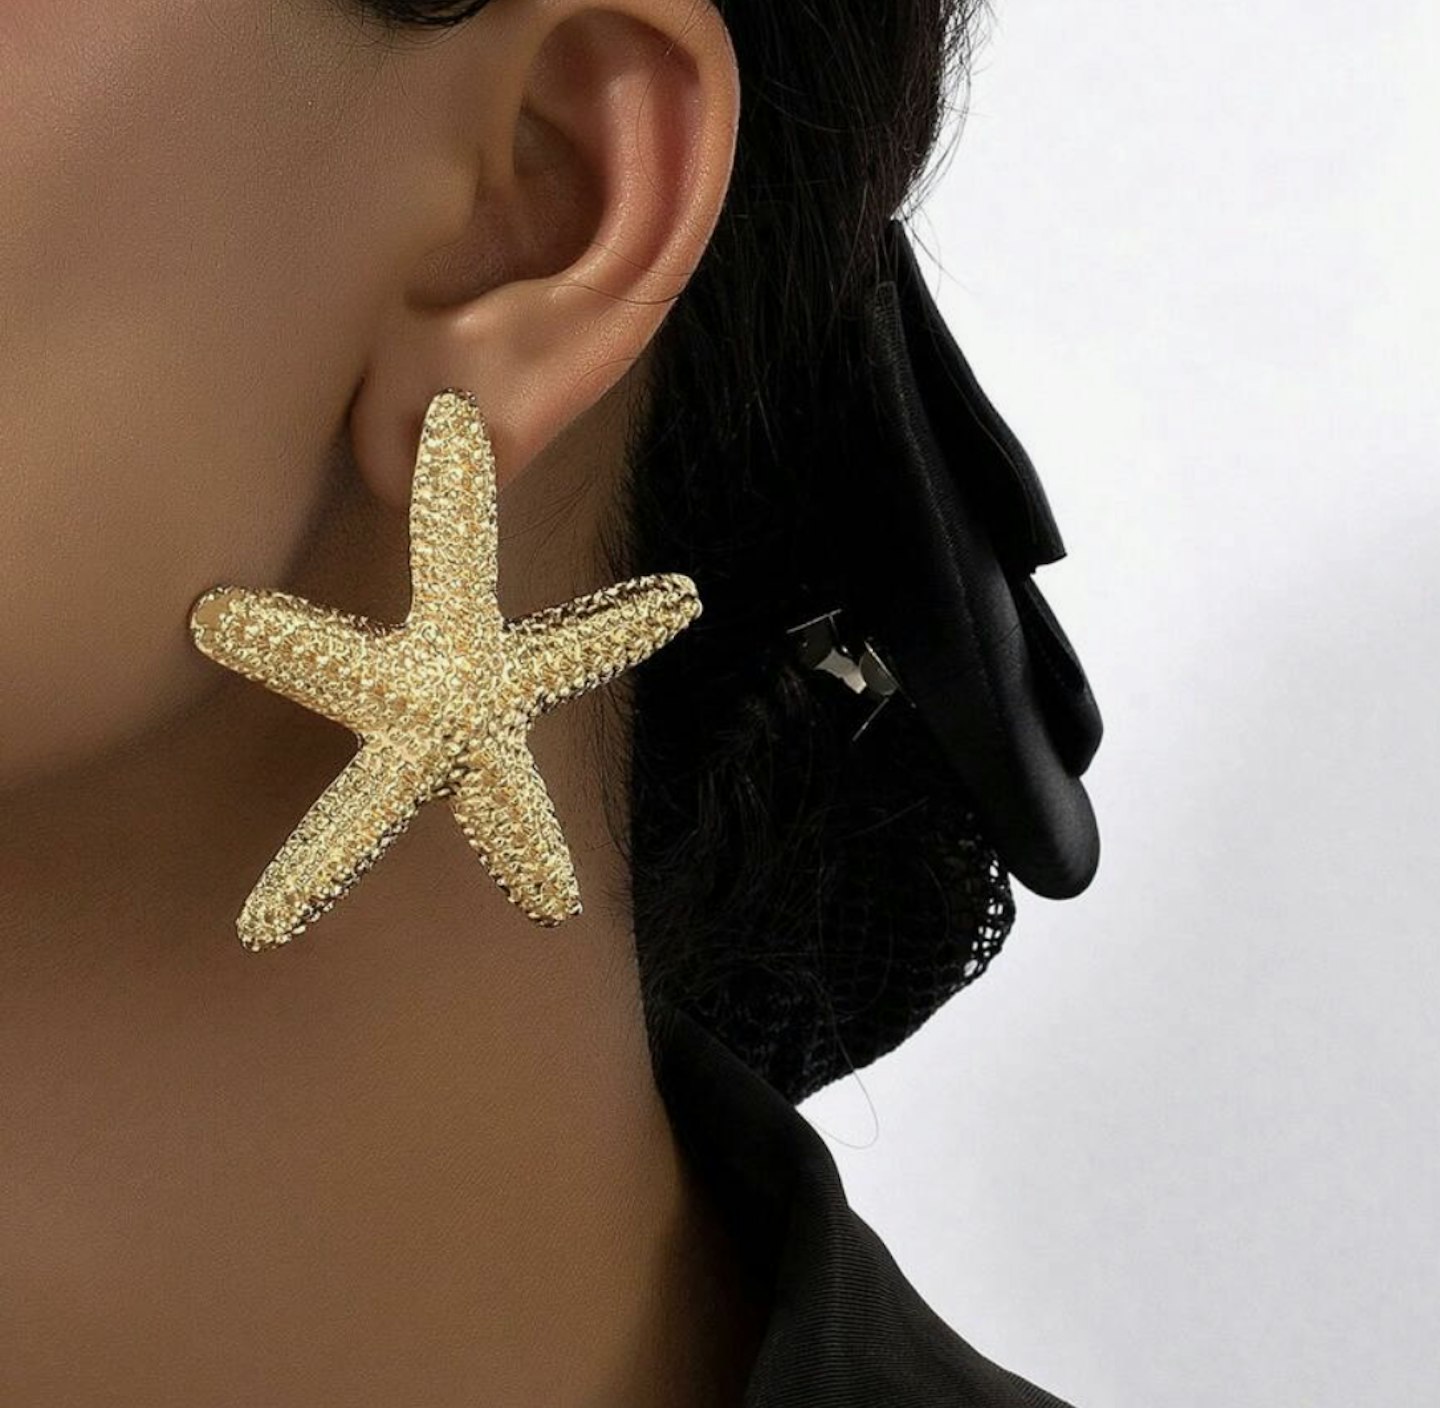 Shein Exaggerated Starfish Earrings